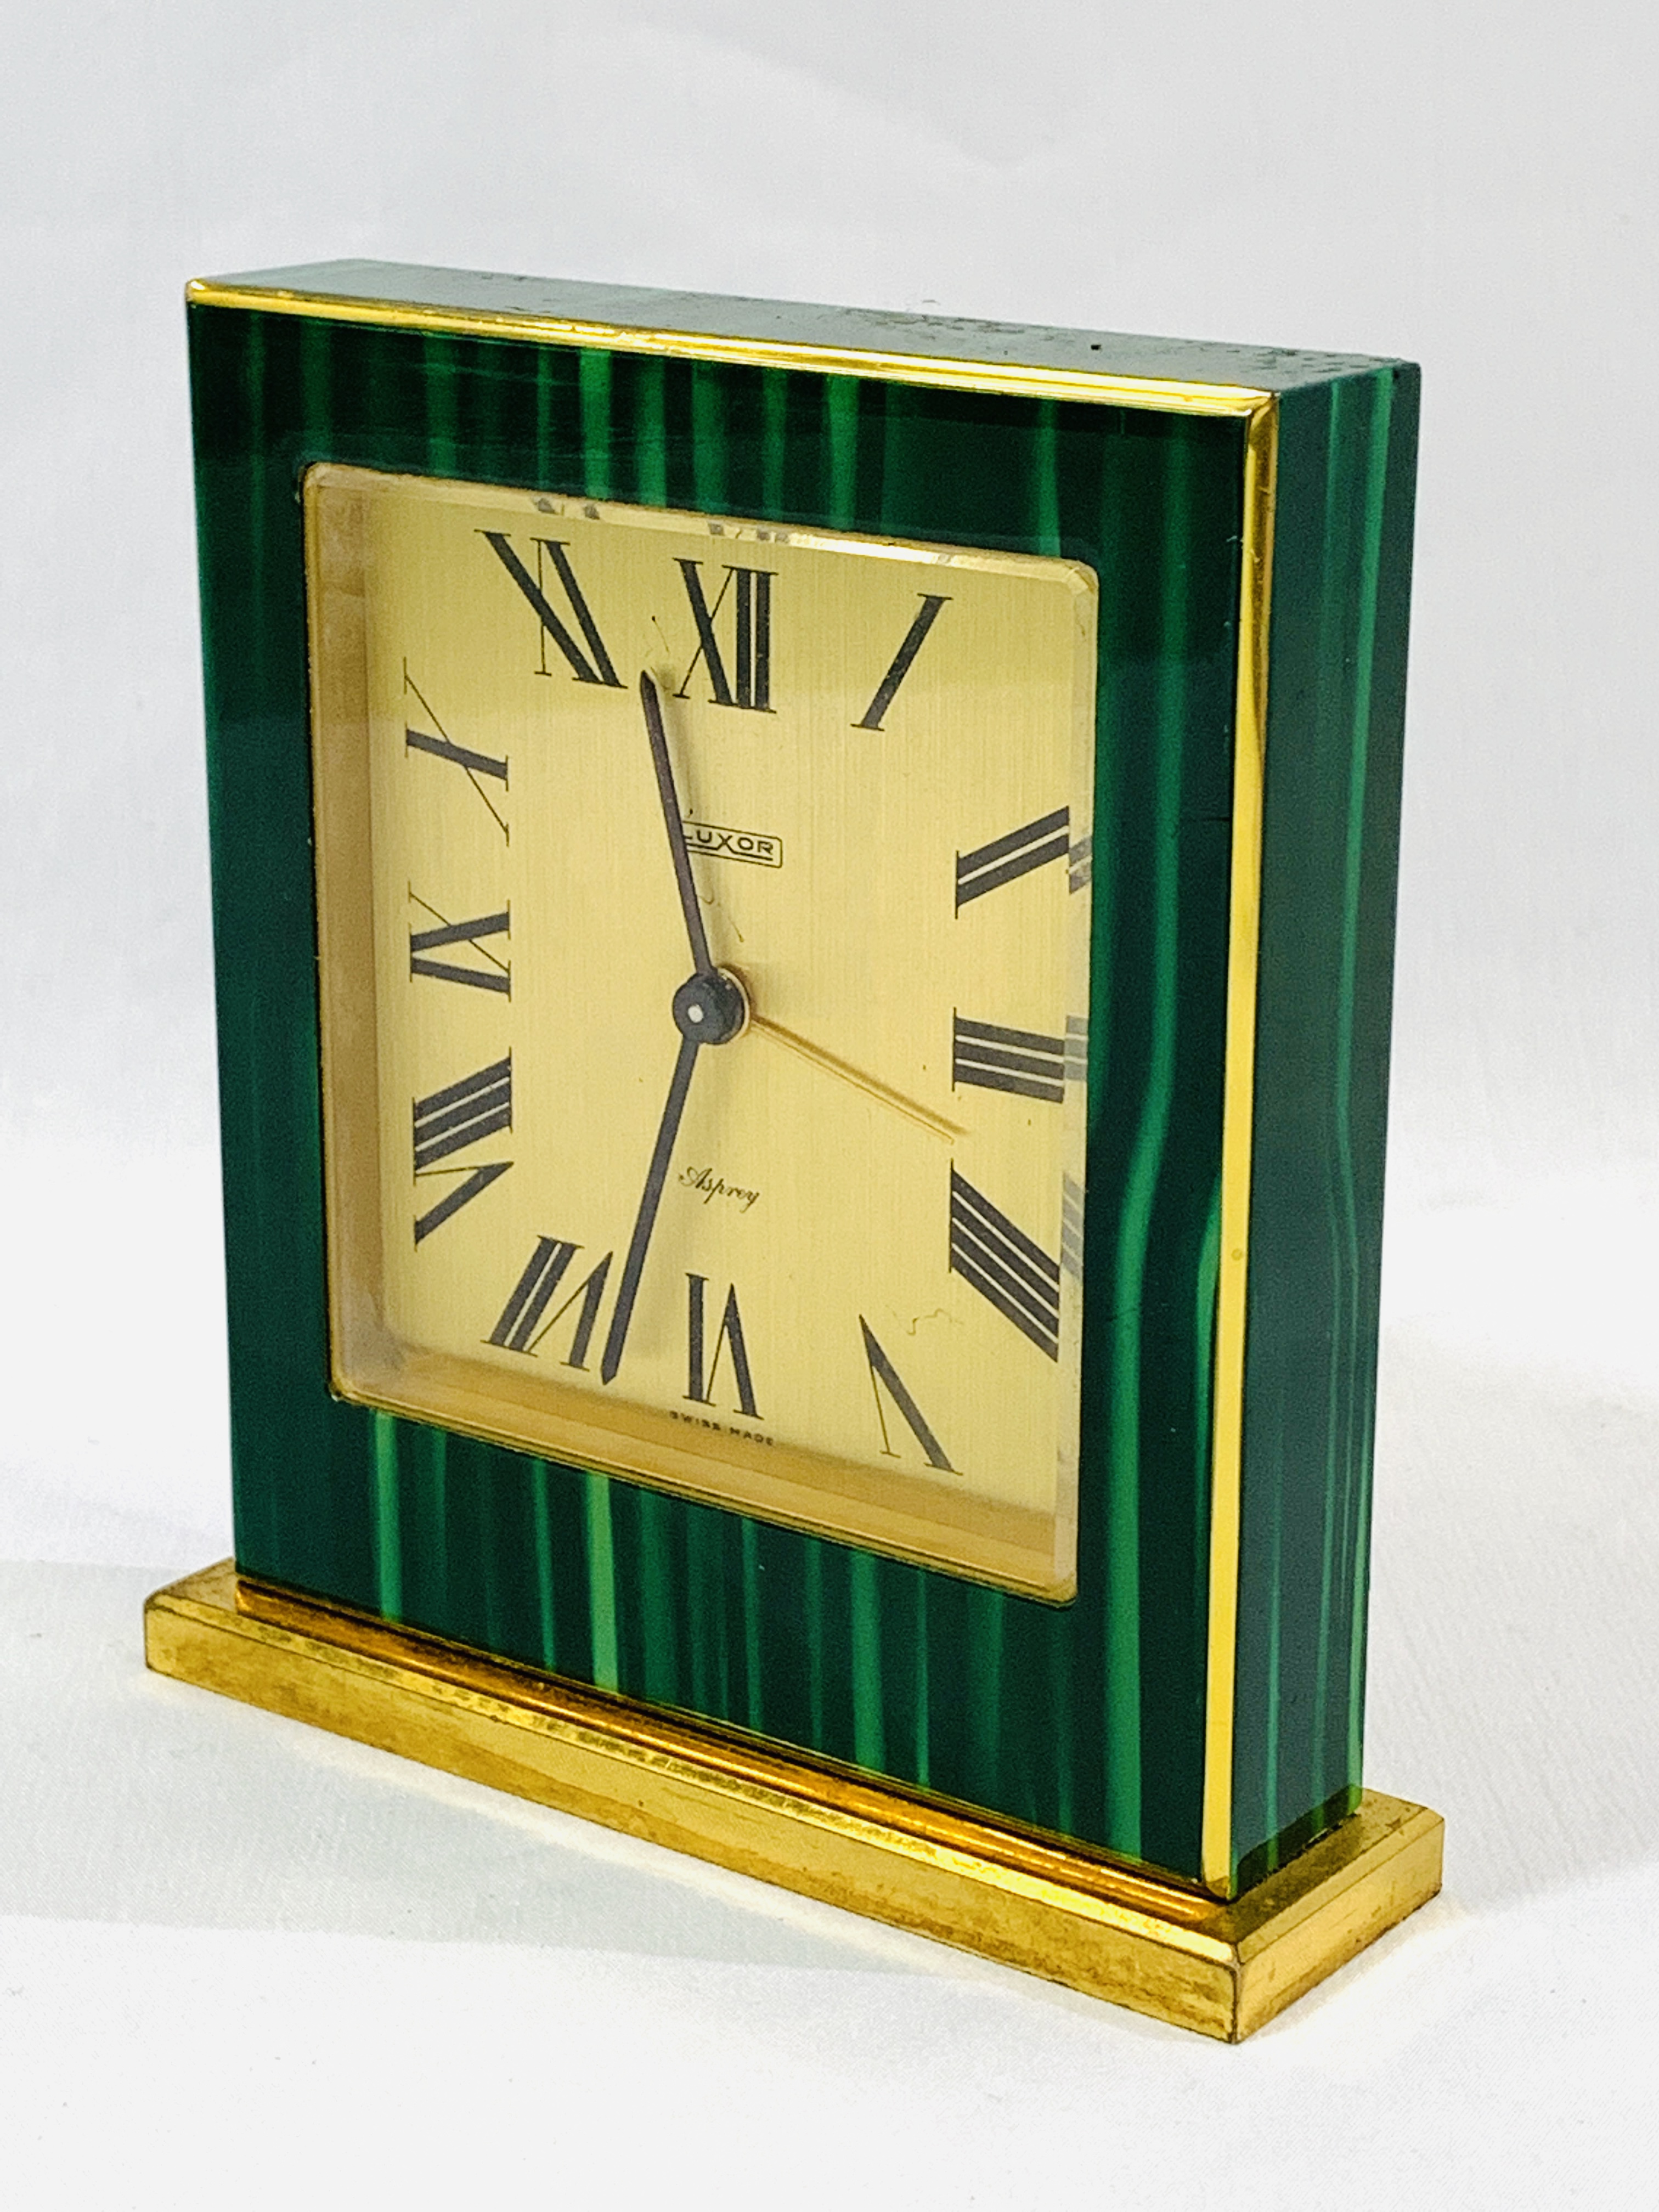 Asprey green malachite alarm clock - Image 4 of 5